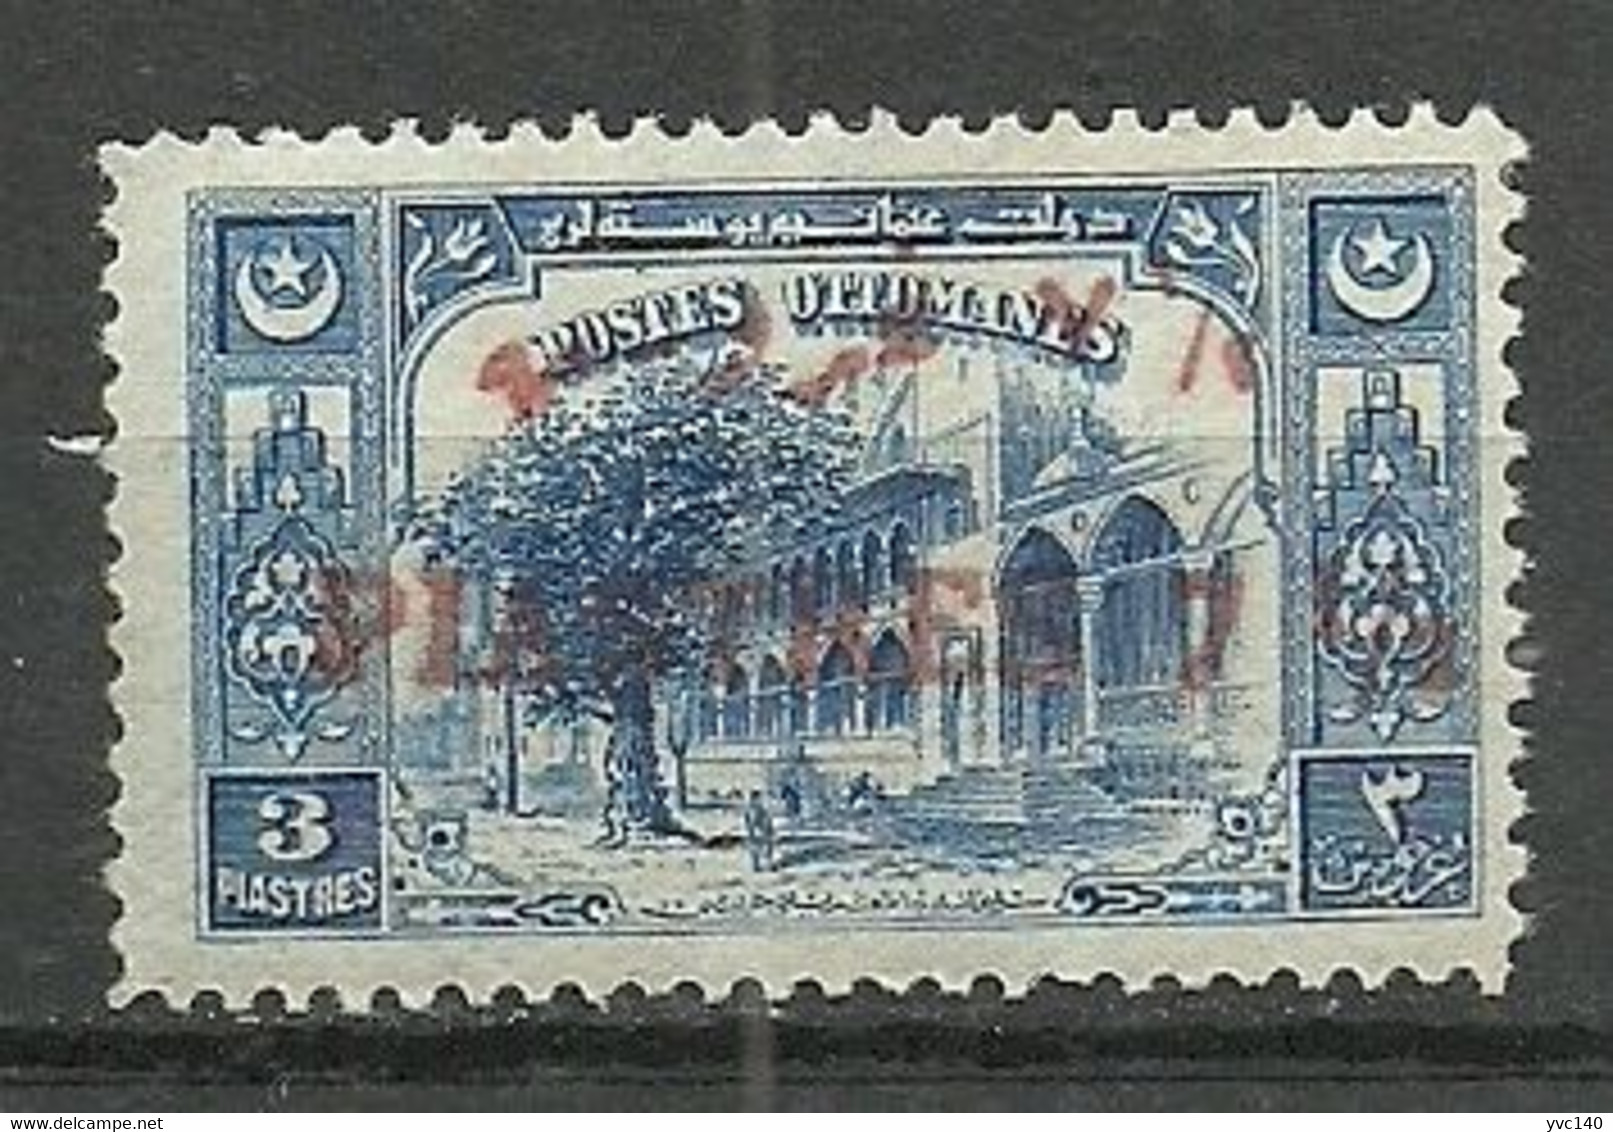 Turkey; 1922 Red Surcharged Postage Stamp, ERROR "Brick Overprint Instead Of Red" - Unused Stamps